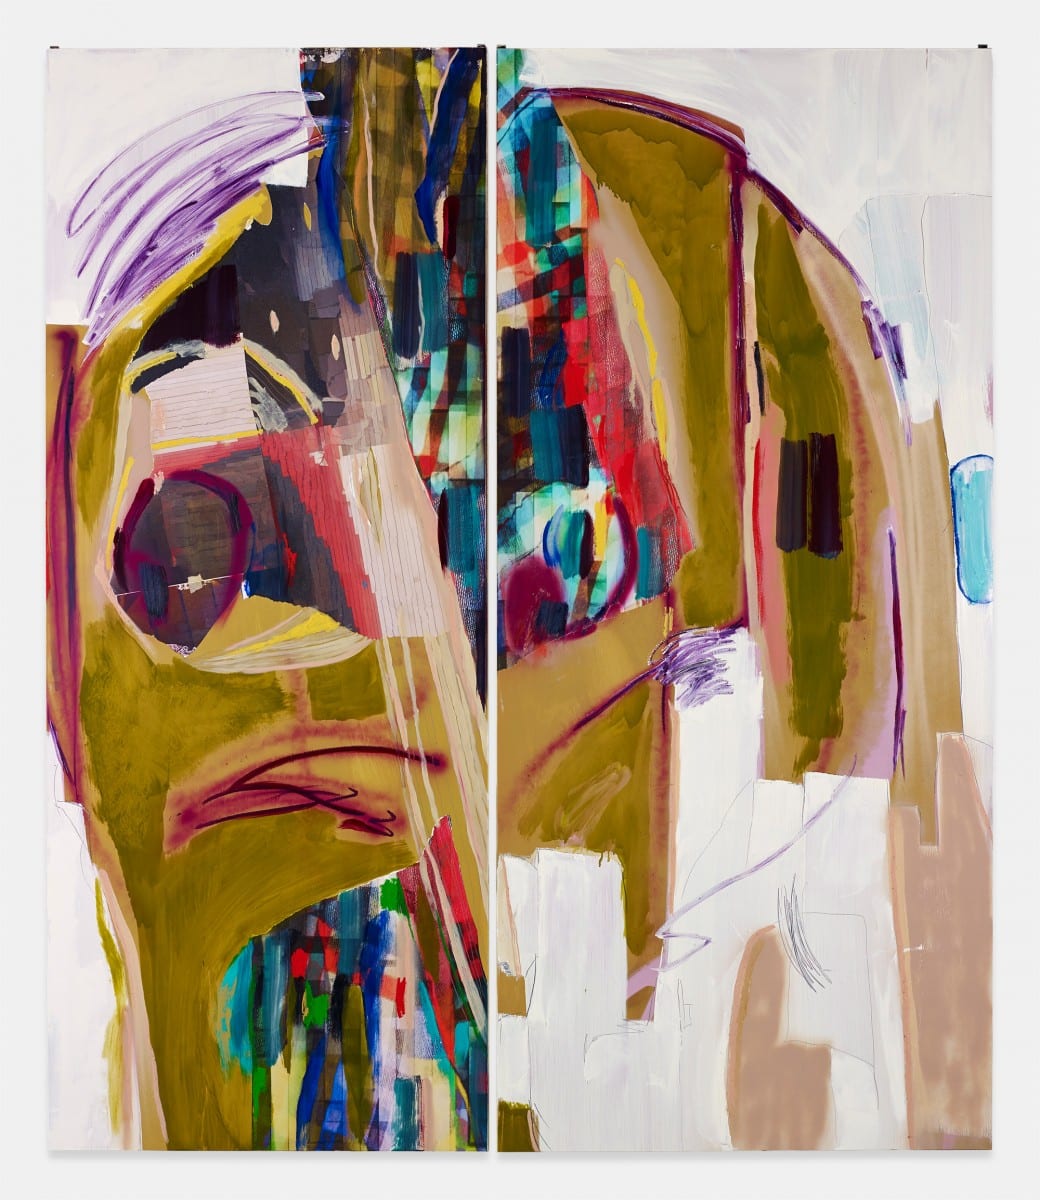 Michael John Kelly, Summer Mask 2, Oil, Acrylic, Pigment Print Collage on Panel, 80" x 69", 2013